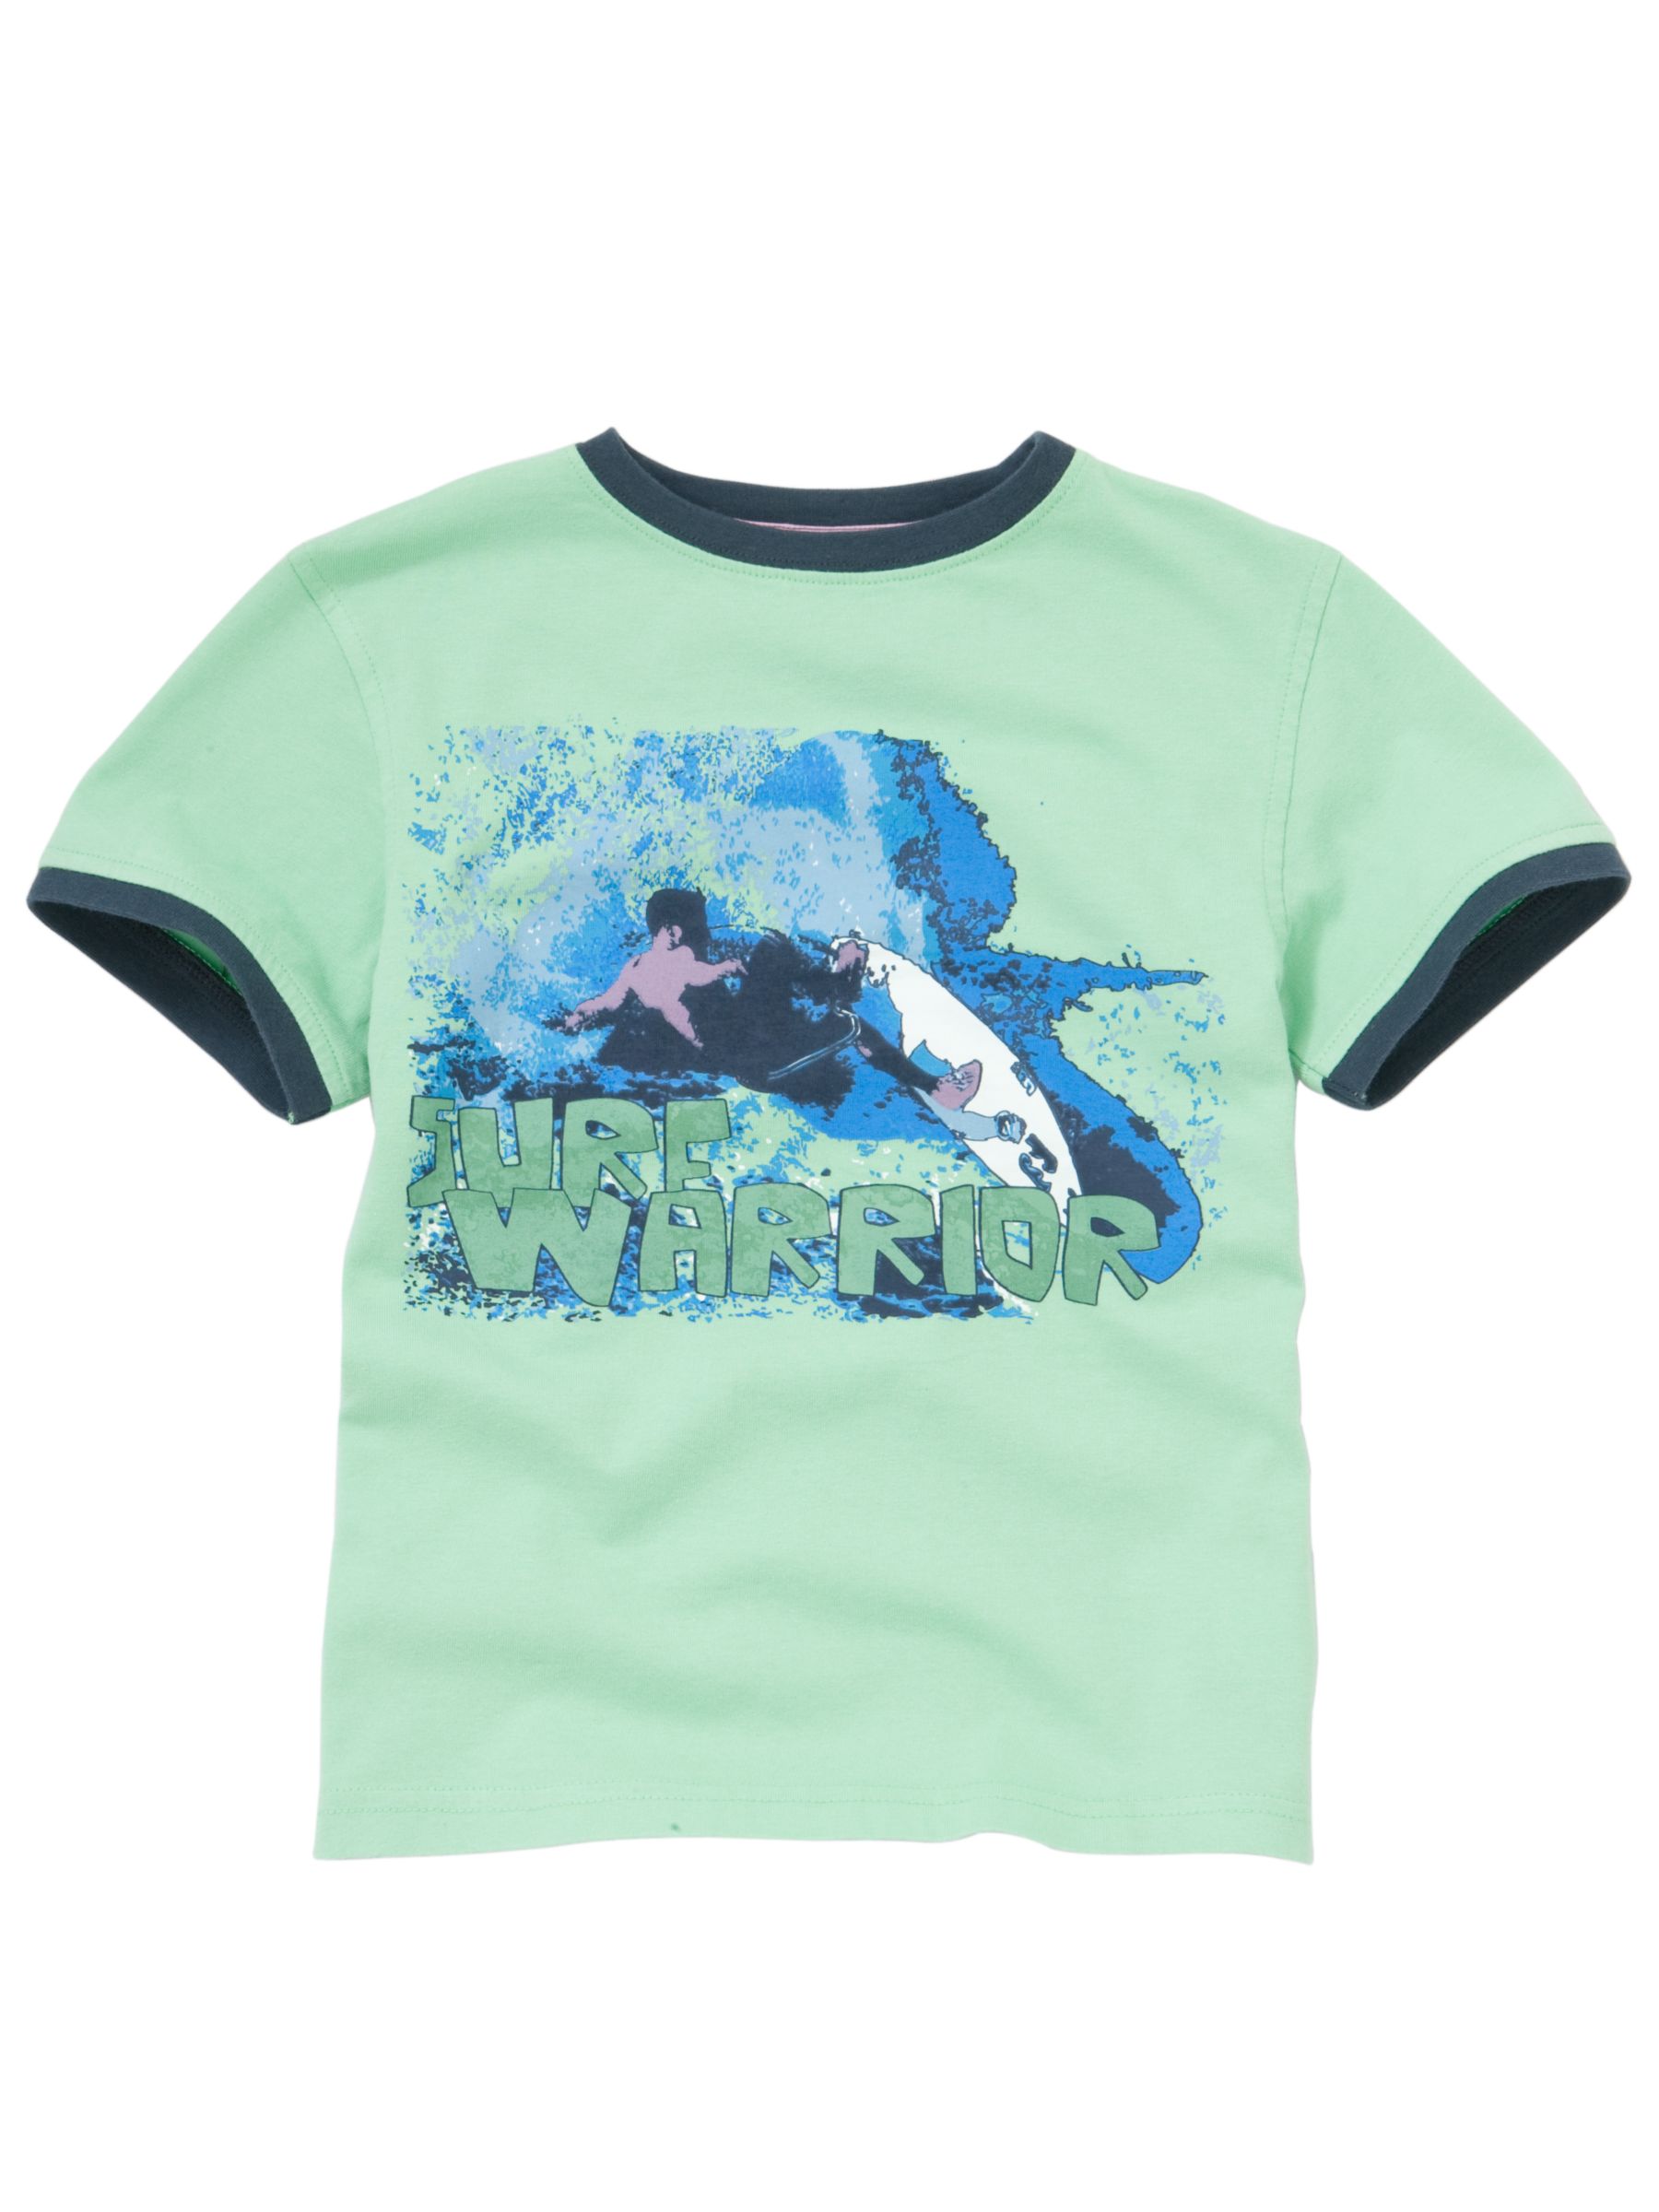 Surfer Graphic T-Shirt, Green